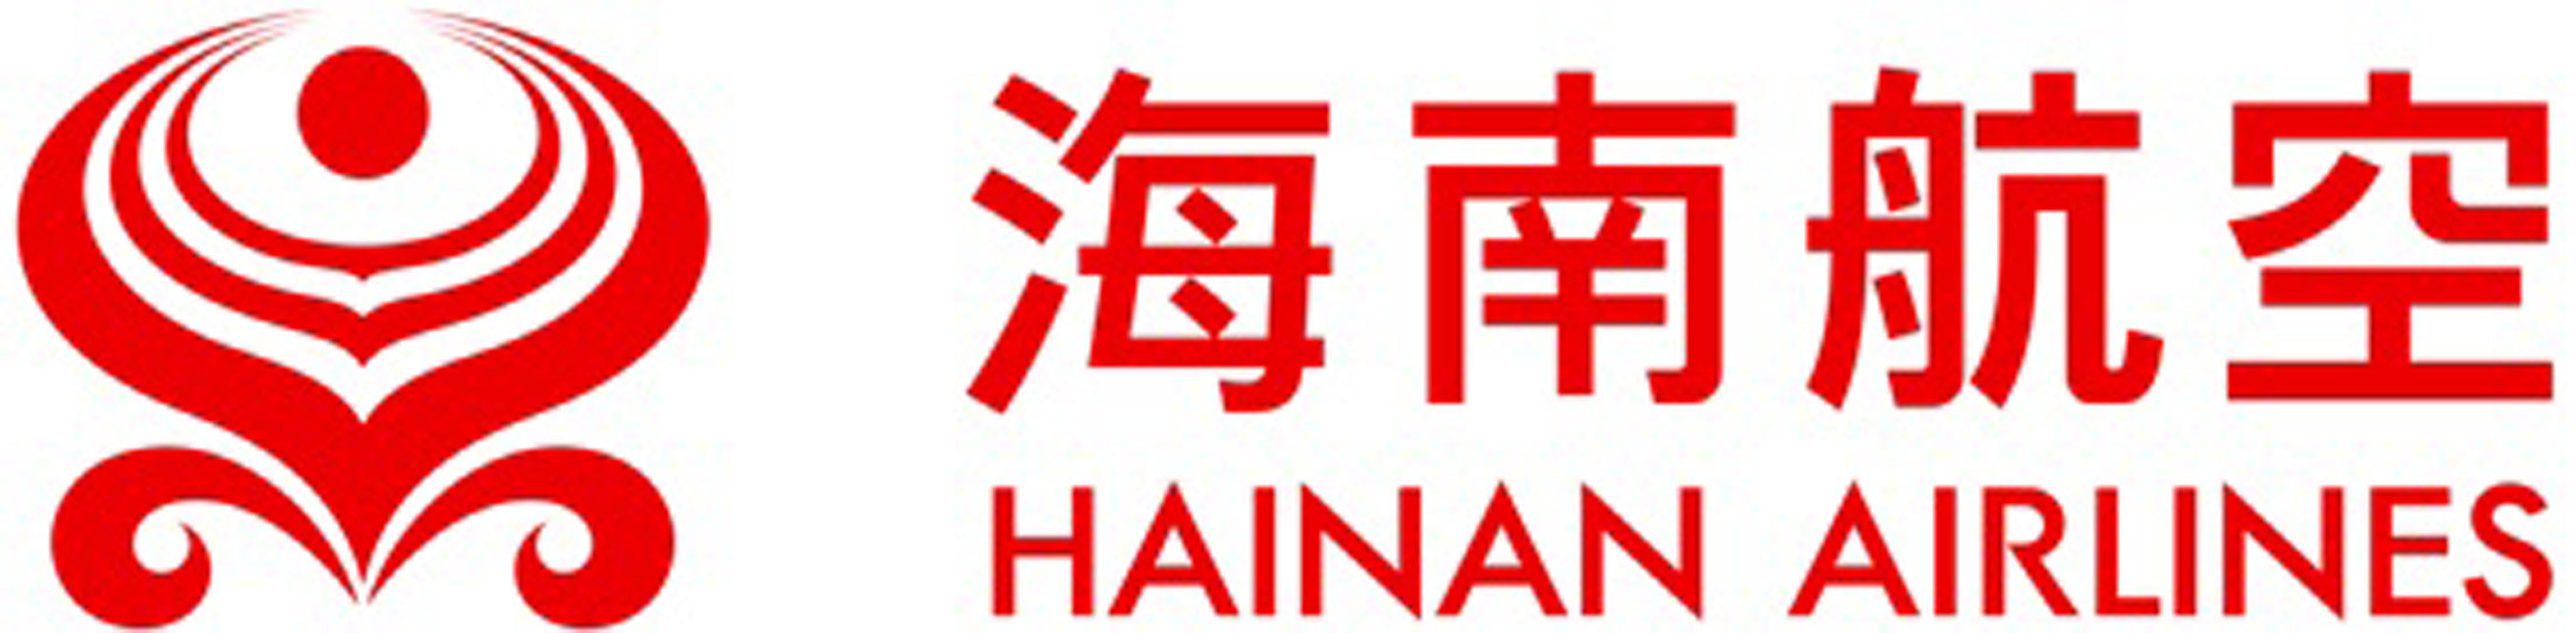 Hainan Airlines Logo.